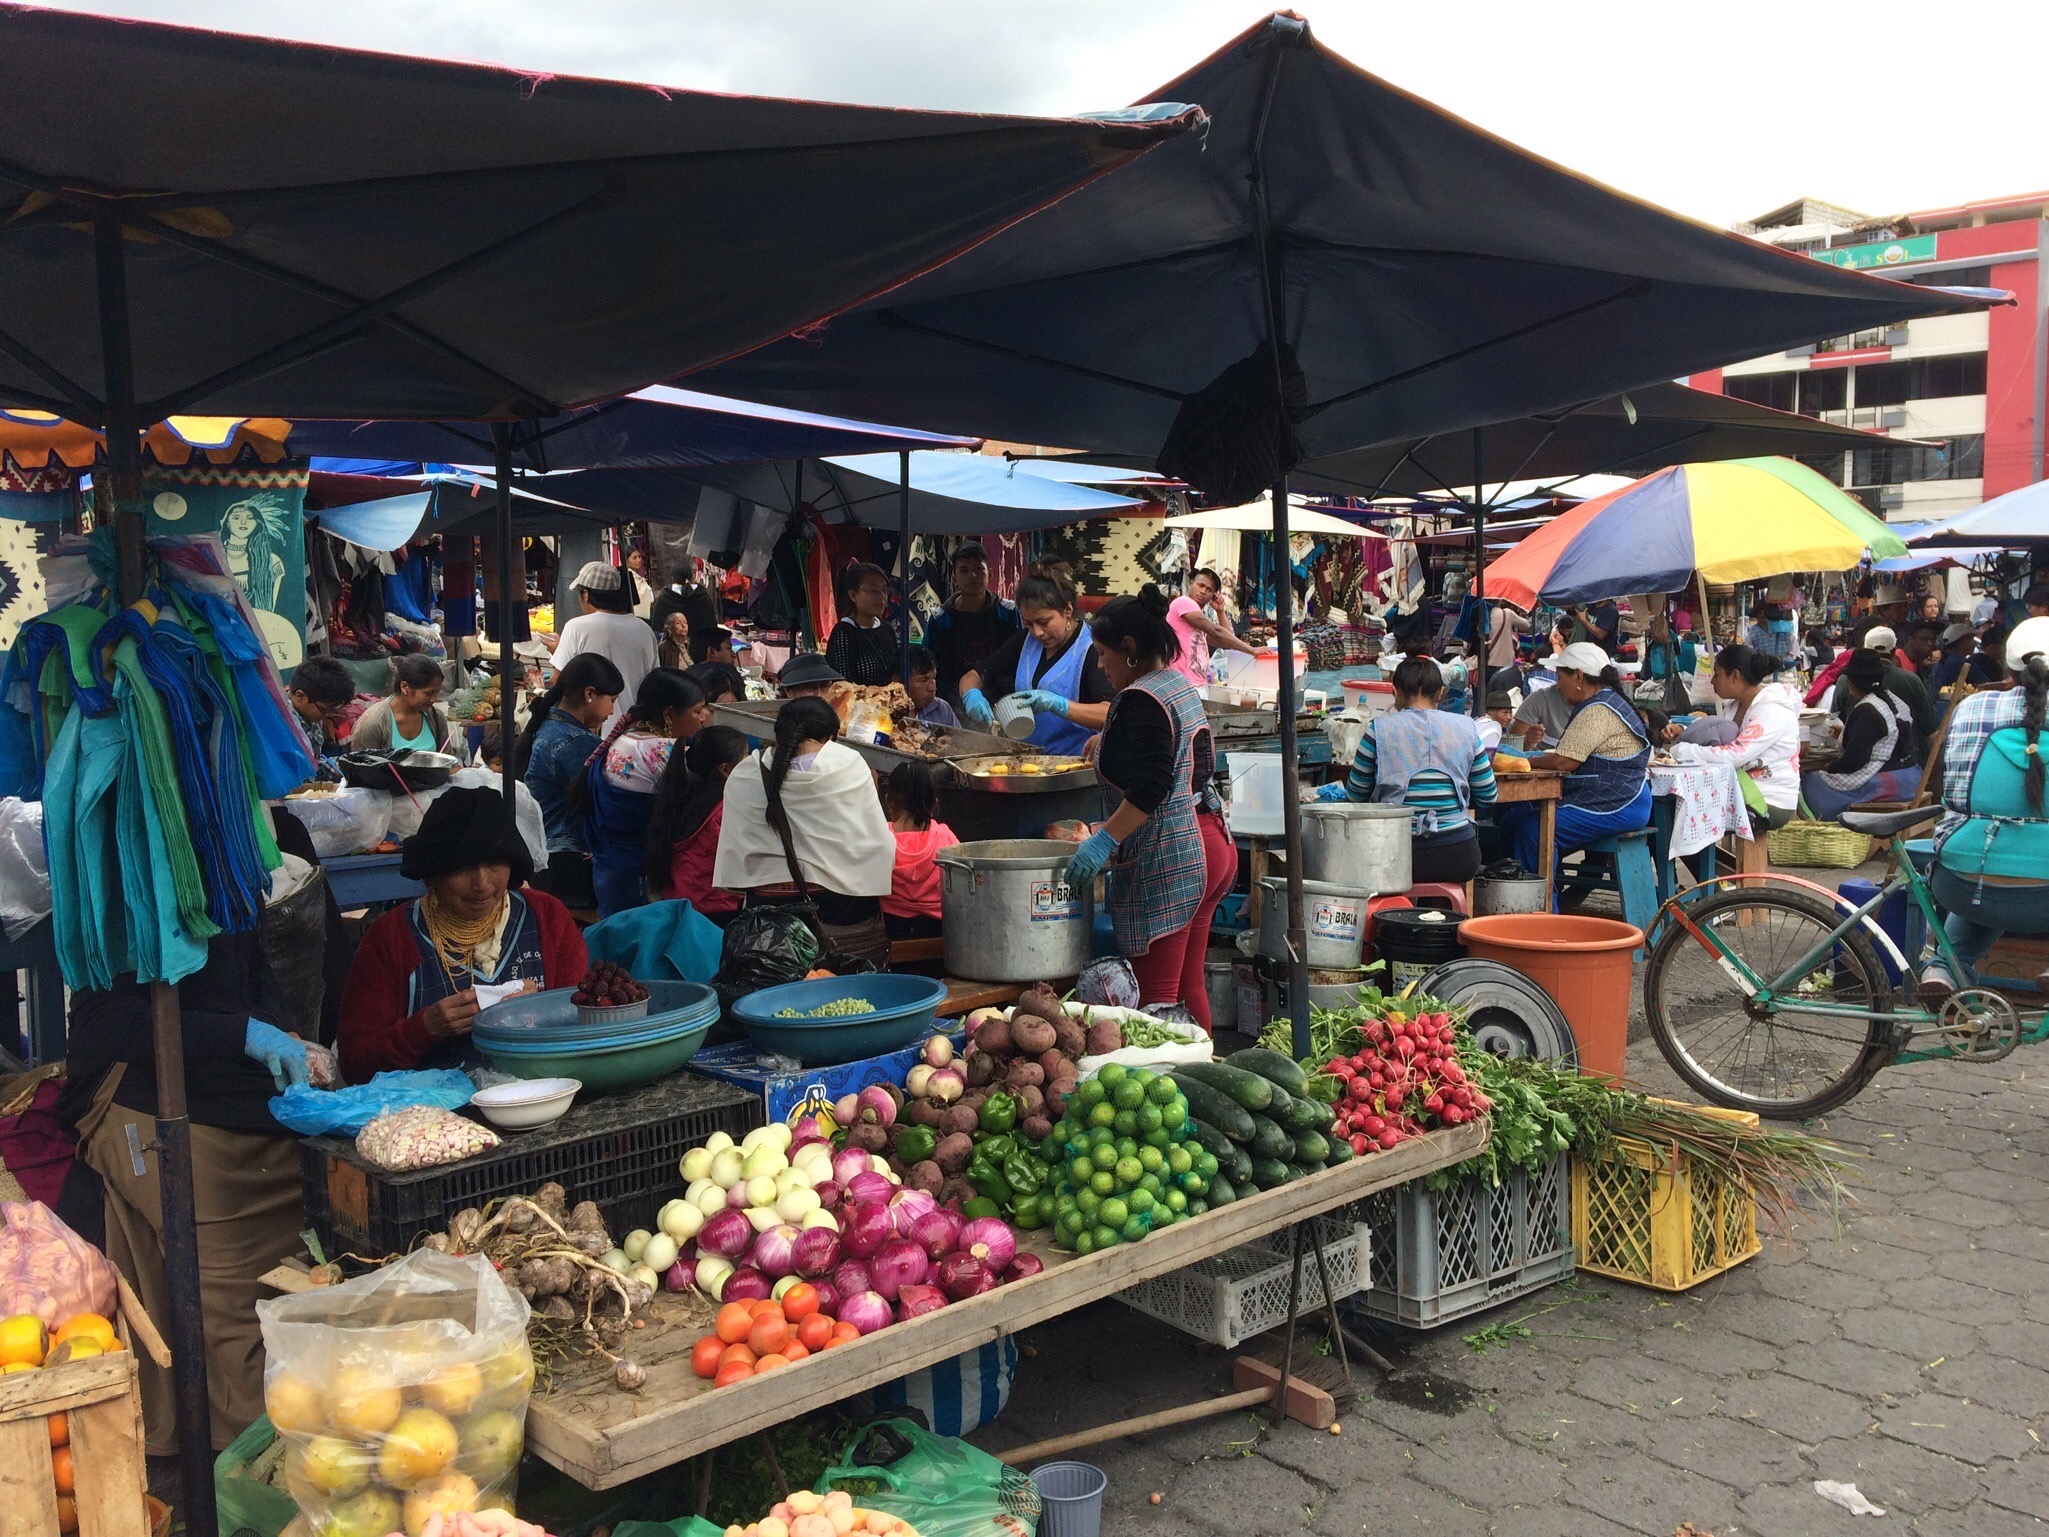 Local colorful market